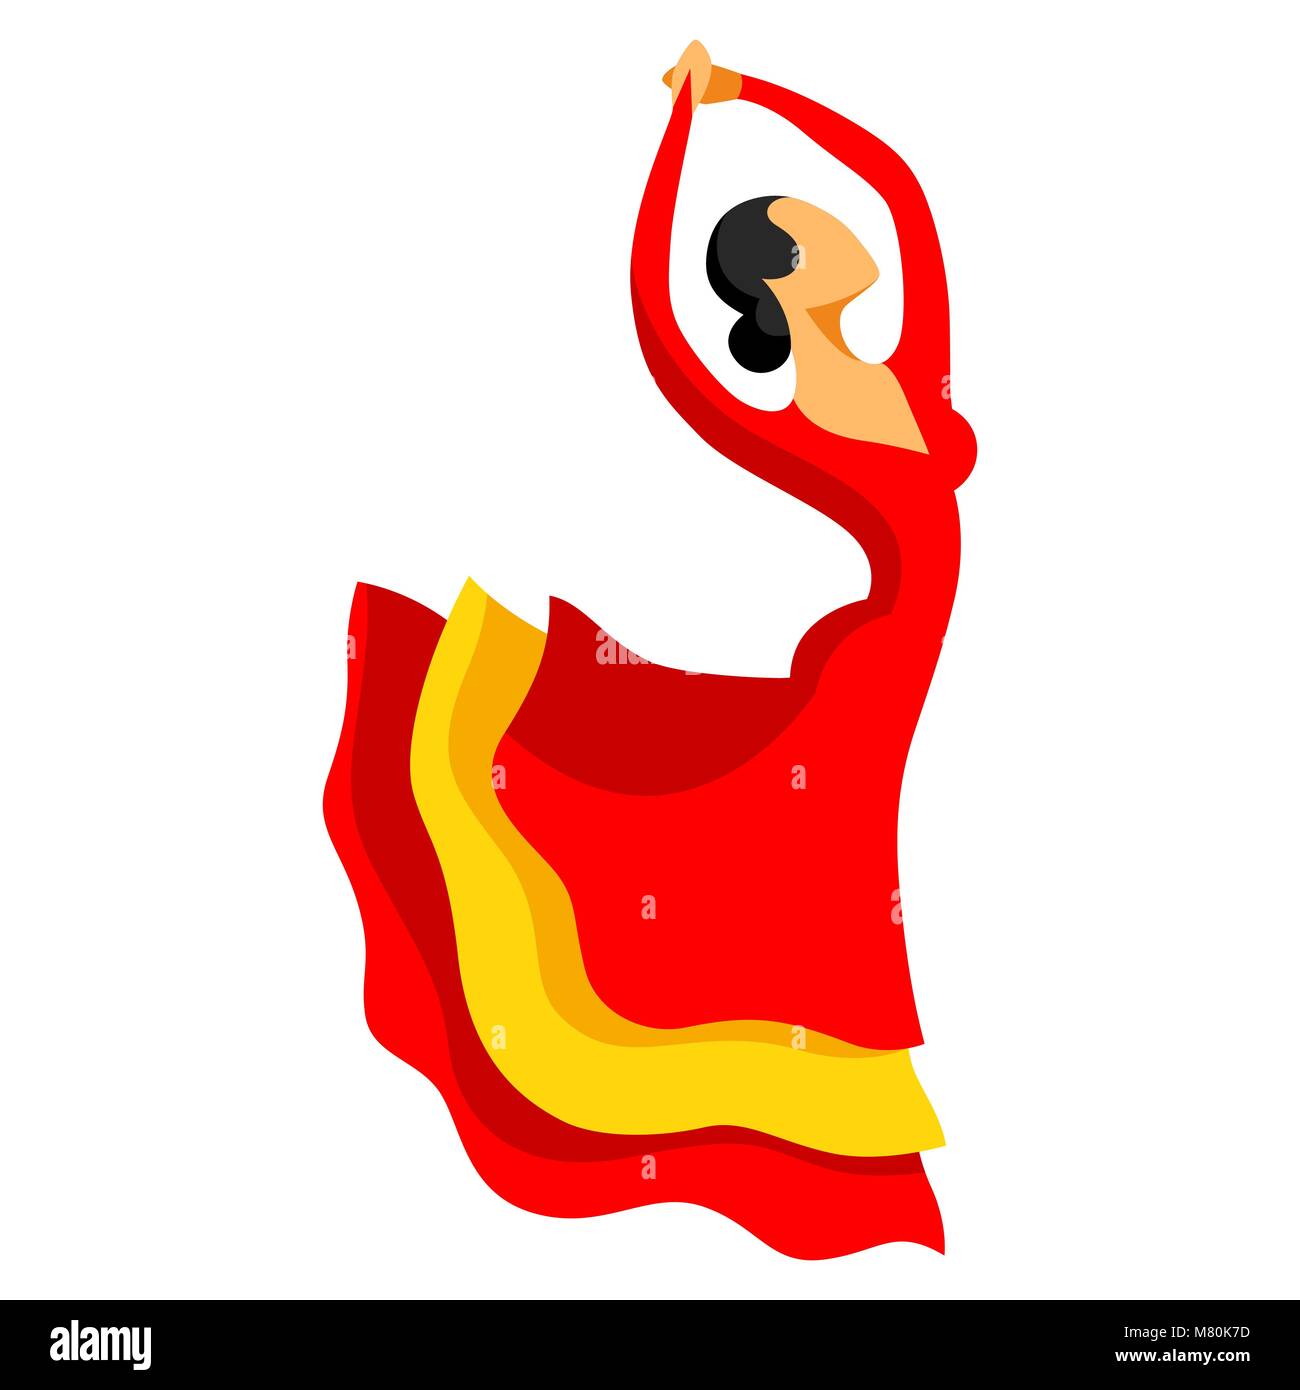 Gitan espagnol Banque d'images vectorielles - Alamy